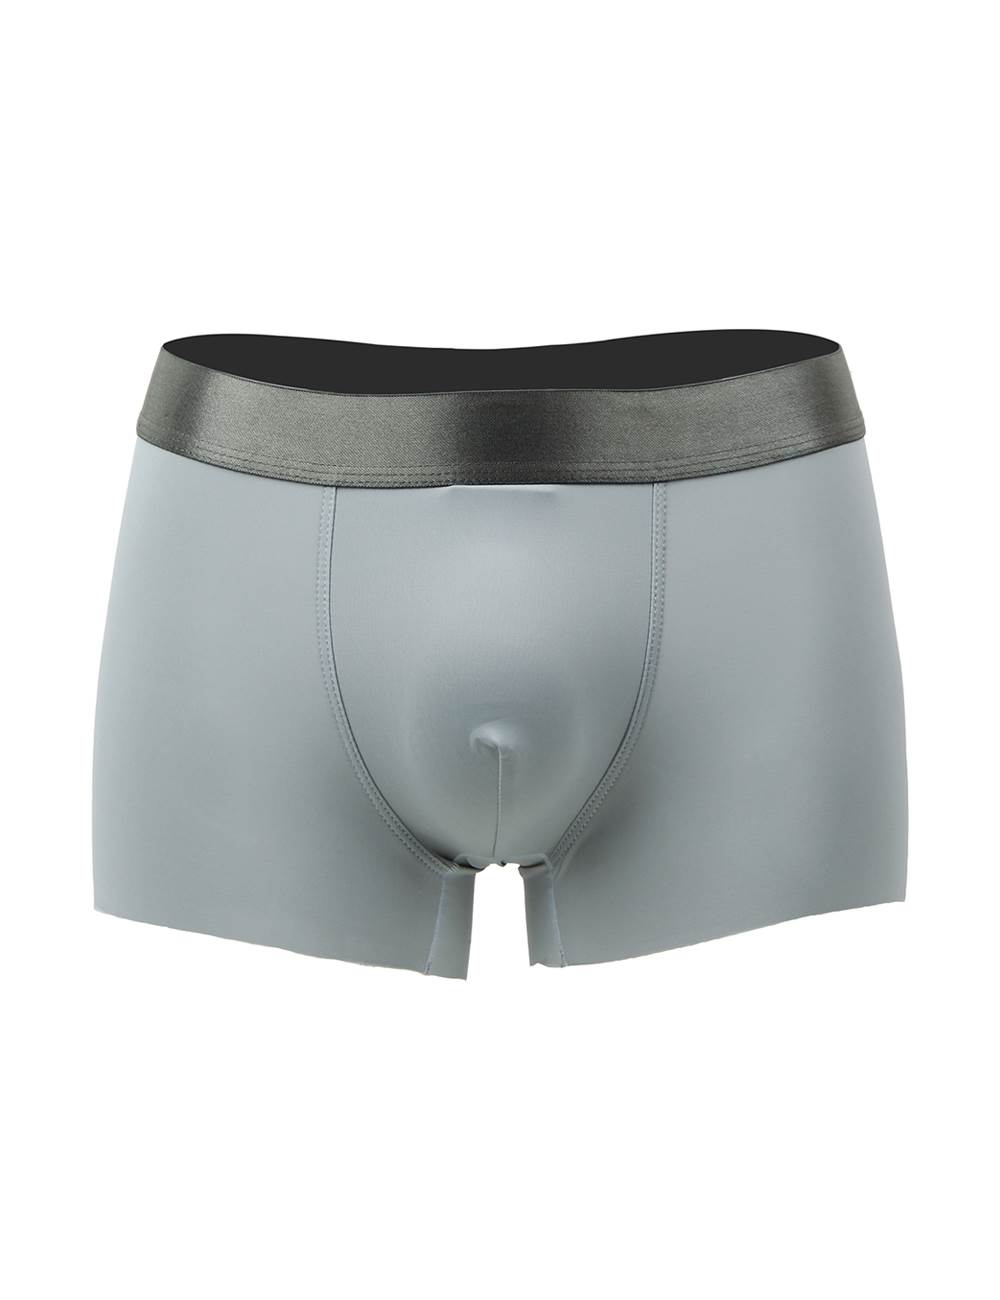 Men Underwear Wholesale,Cheap Price for you| Comeondear.com